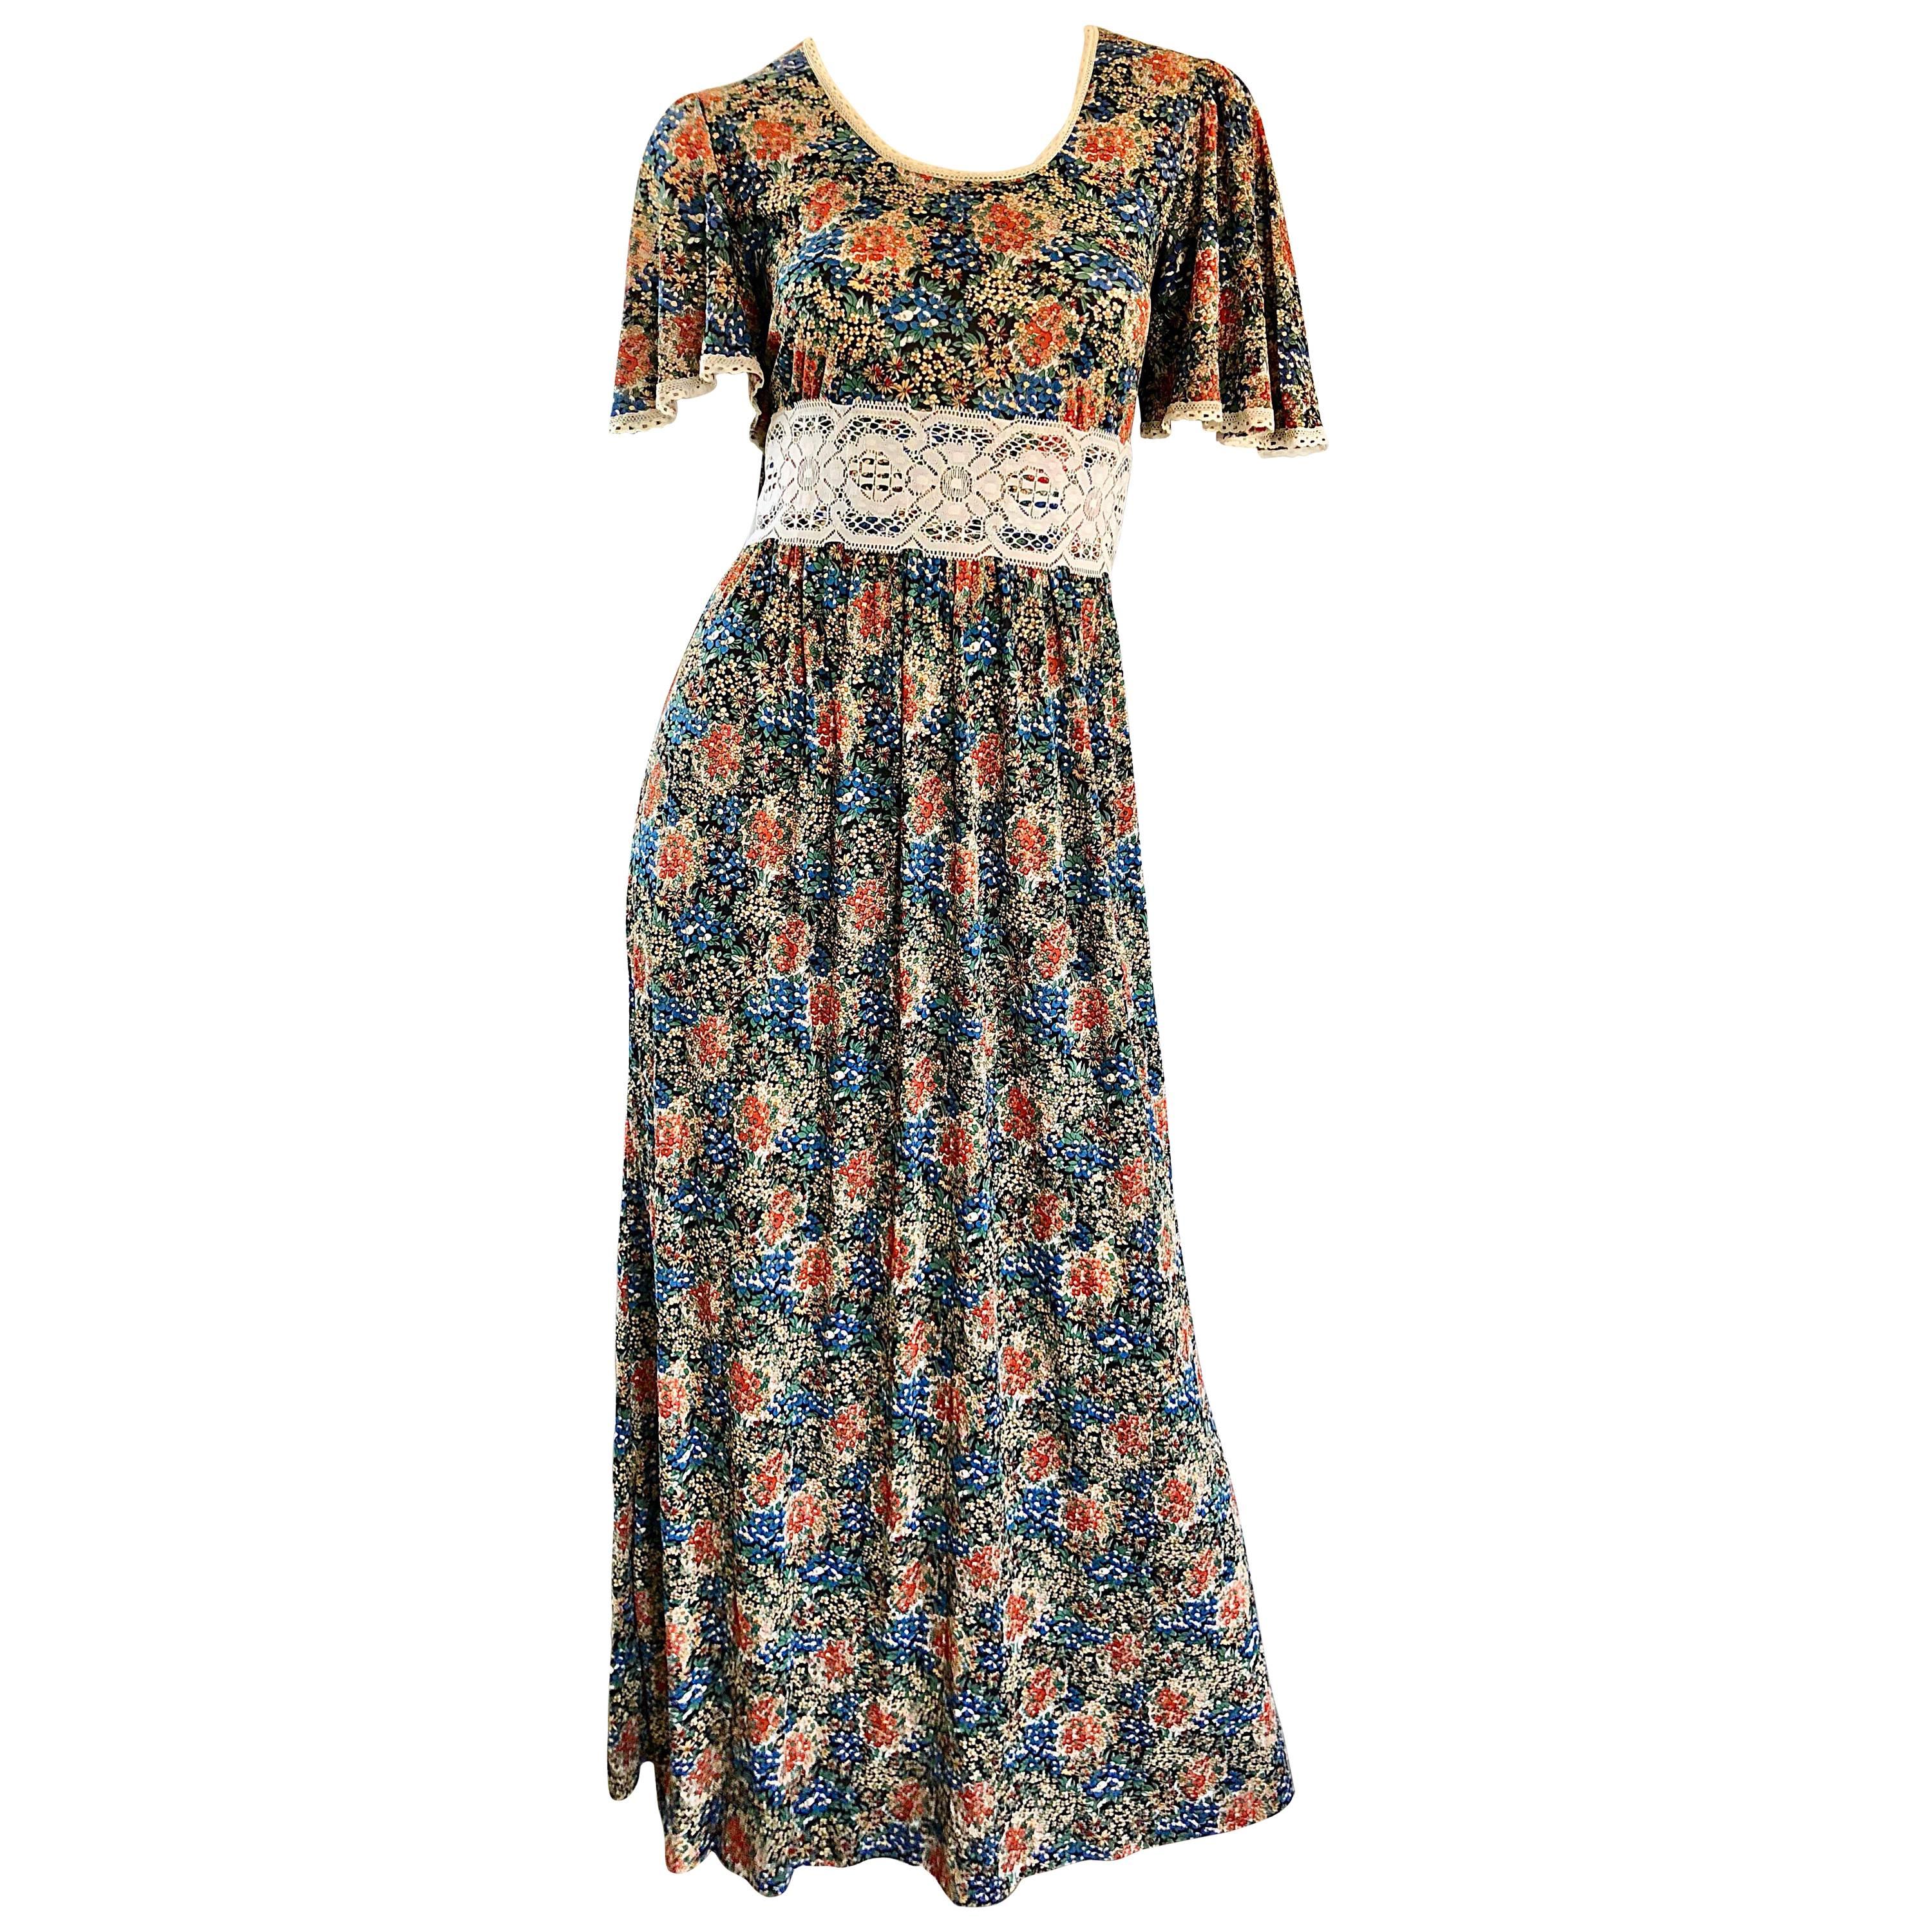 AMazing 1970s Boho Flower Print Jersey + Lace Vintage 70s Maxi Dress